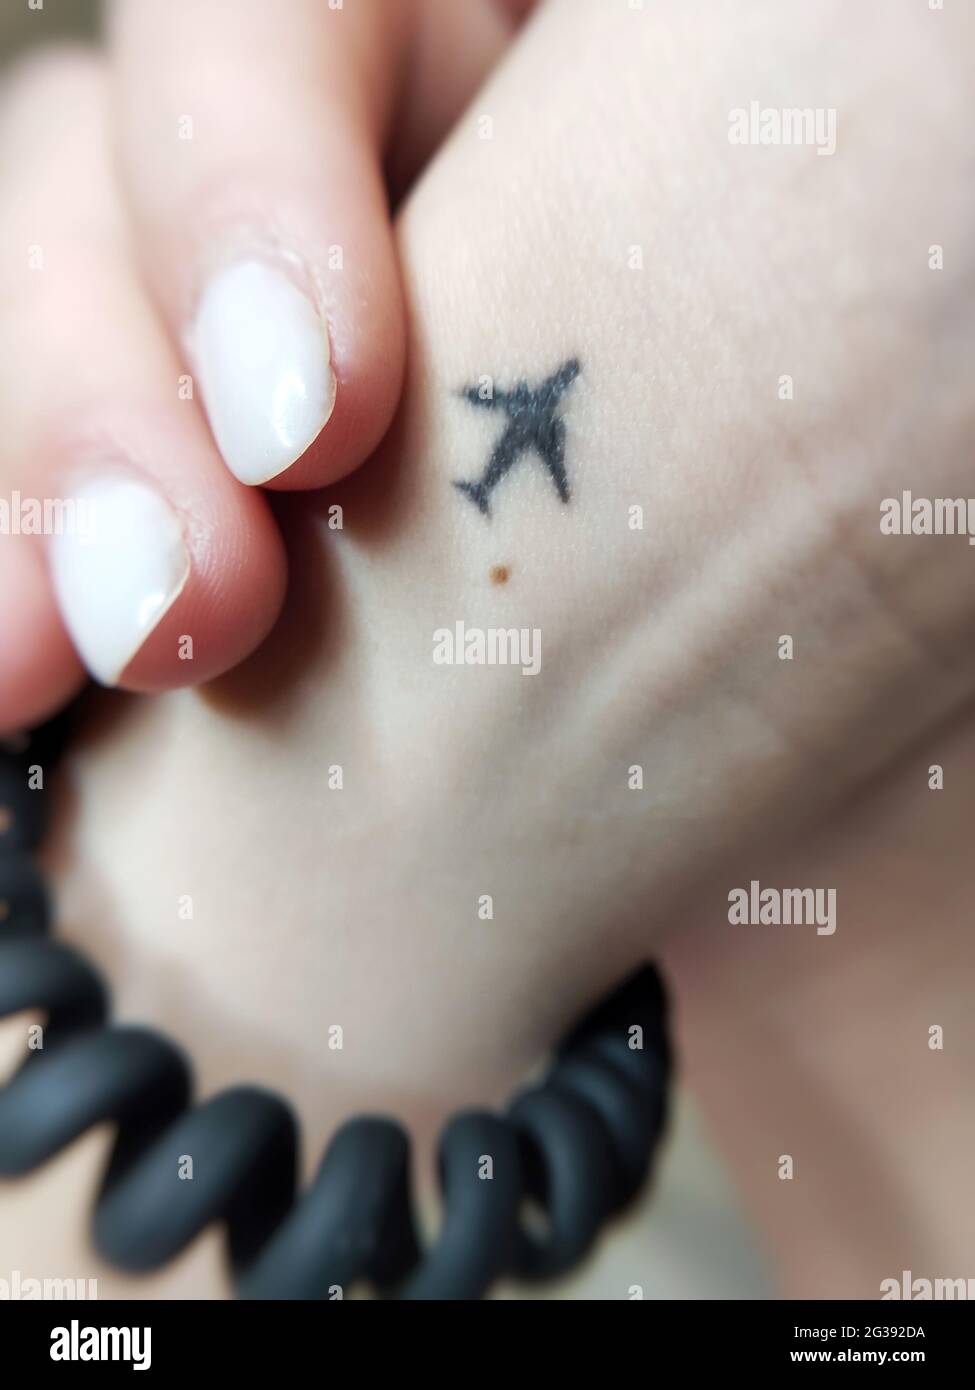 25 Beautiful Travel Tattoo Ideas for Girls